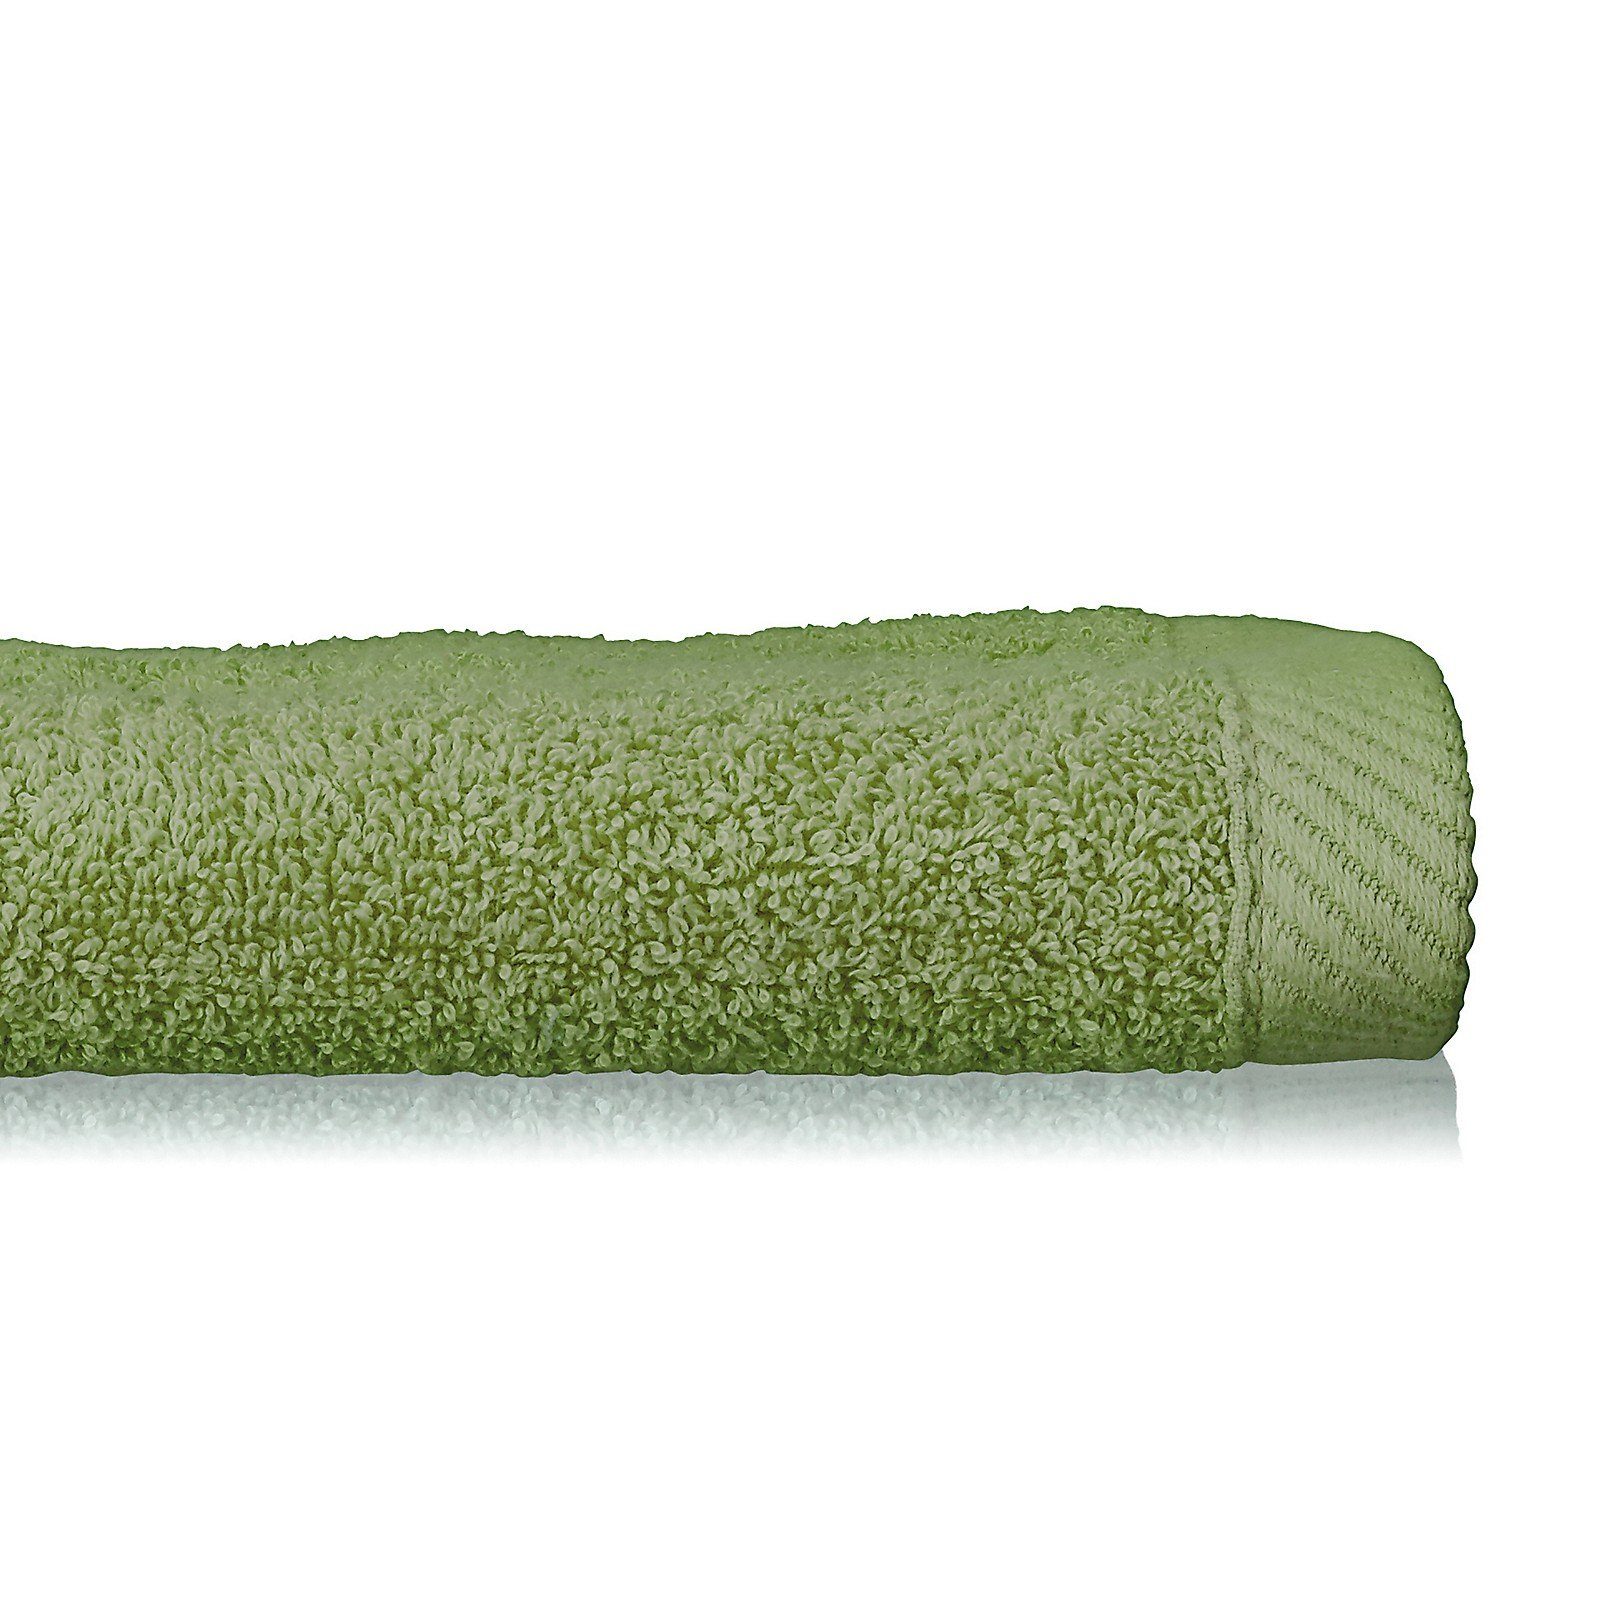 flauschig, fusselarm, Gästehandtuch moosgrün kela bis saugfähig, waschbar, trocknergeeignet Ladessa, 60°C